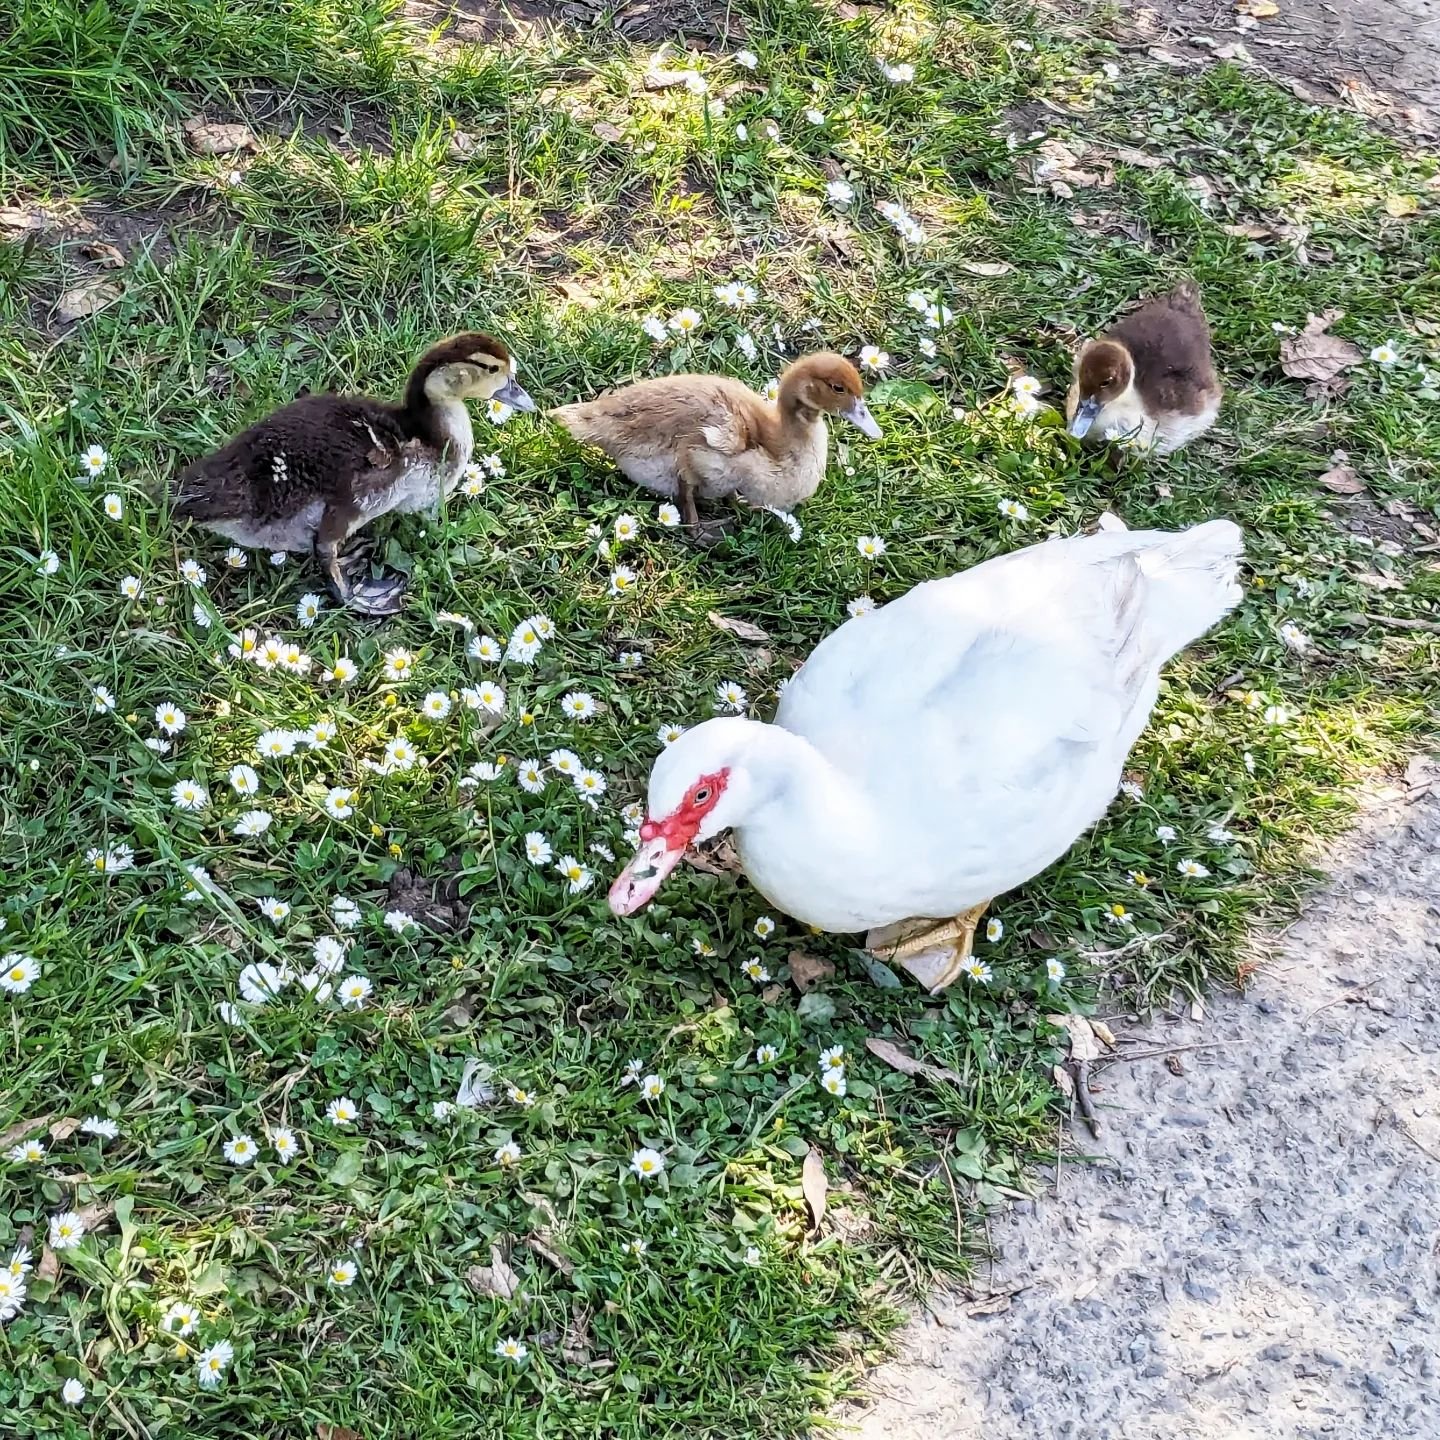 It's duckling season at the pond at McLaren Park. Muscovy ducks in the first photo, mallards in the second.
.
.
.
#ducks #ducksofinstagram #ducklings #sanfrancisco #mclarenpark #waterbirds